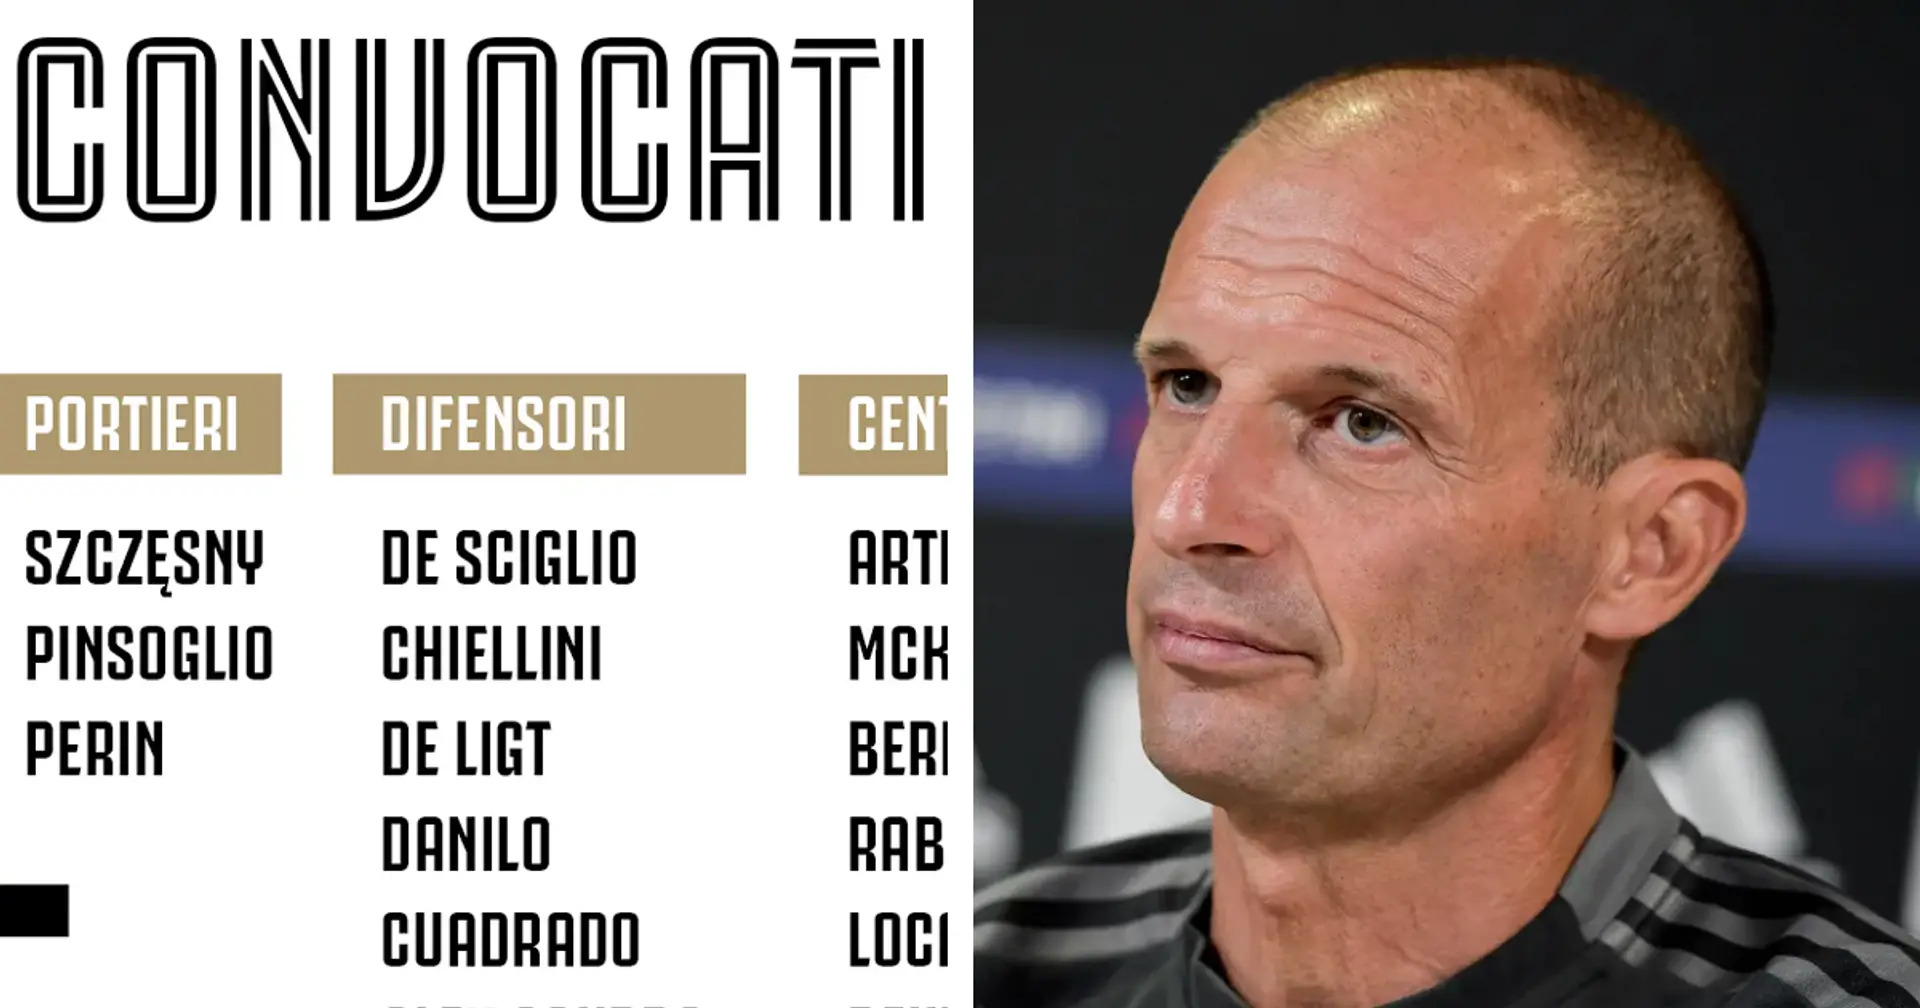 UFFICIALE | I convocati di Allegri per Milan-Juventus: nessuna sorpresa dell'ultim'ora, Bonucci OUT